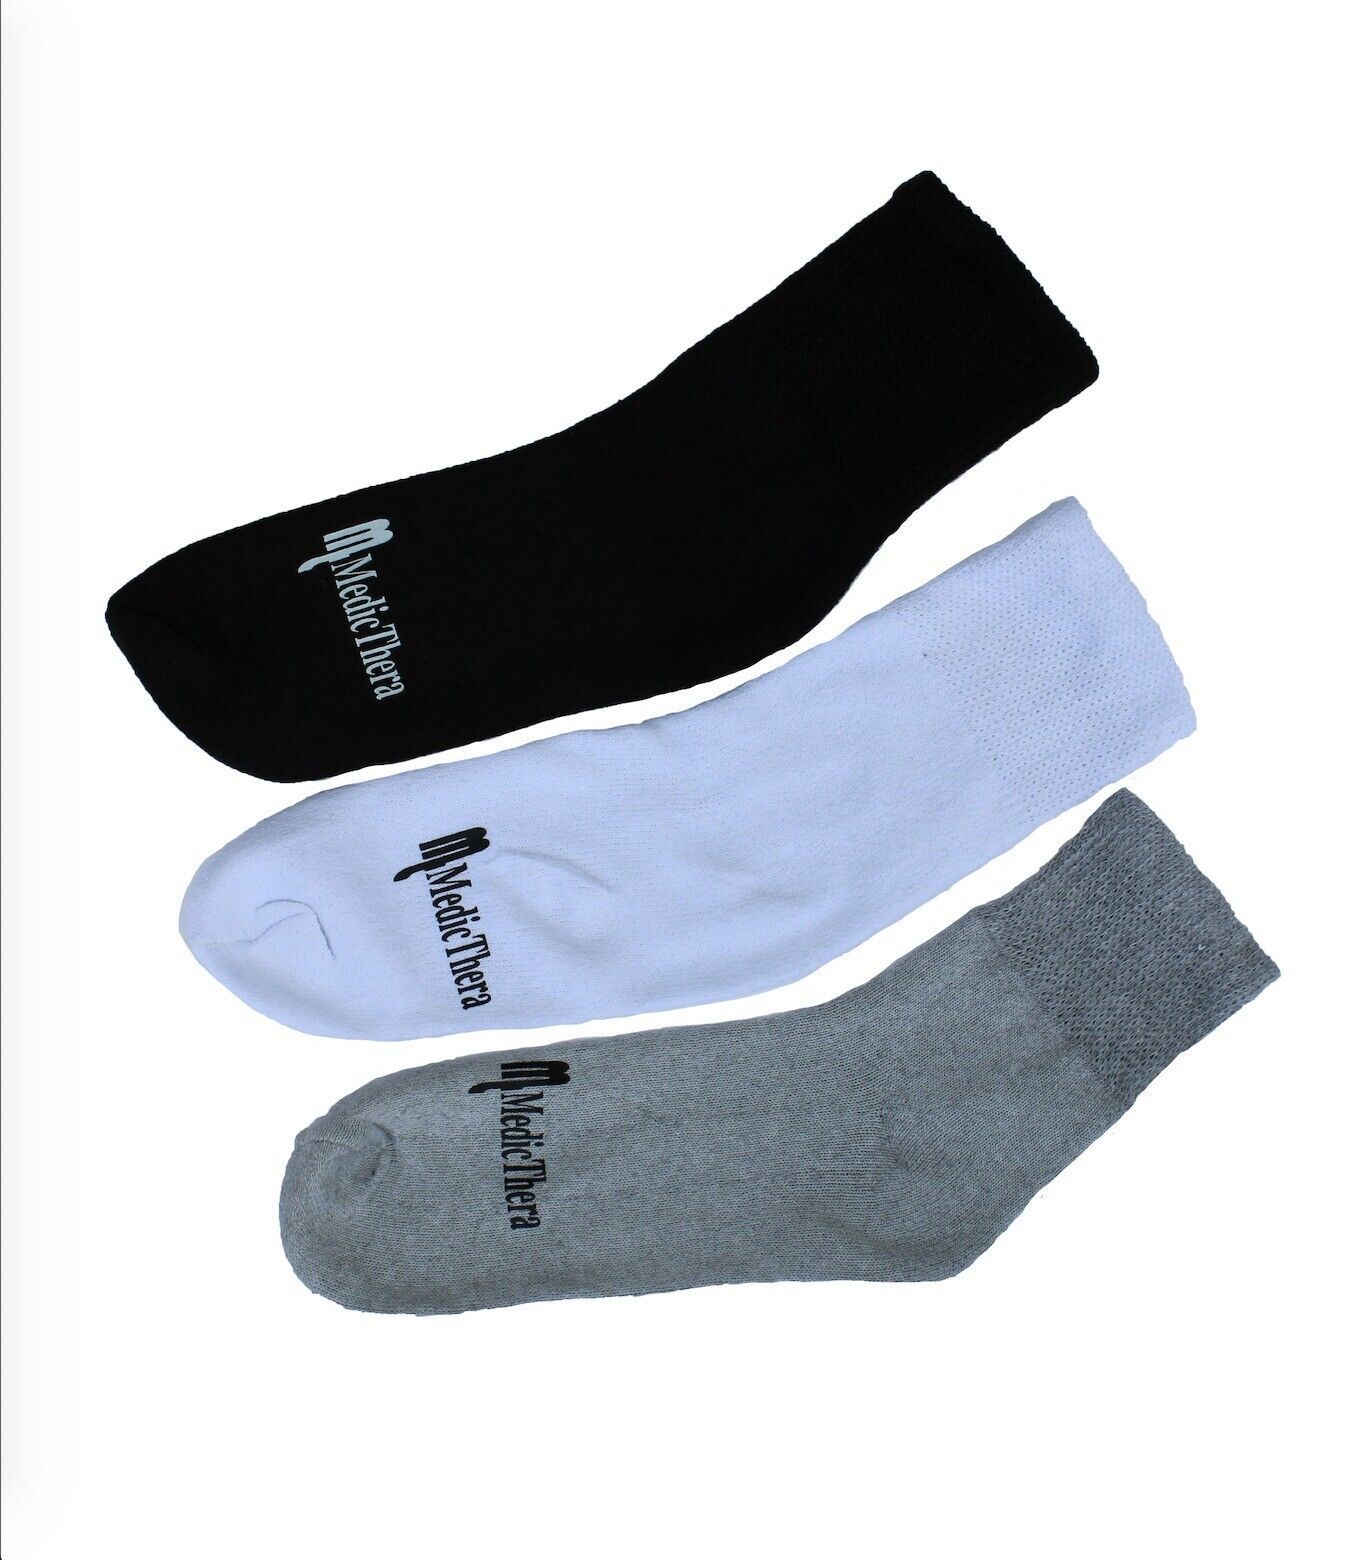 3, 6 & 12 Pack of Medicthera Diabetic Socks Loose Fit Top 100% Cotton (3 Colors)